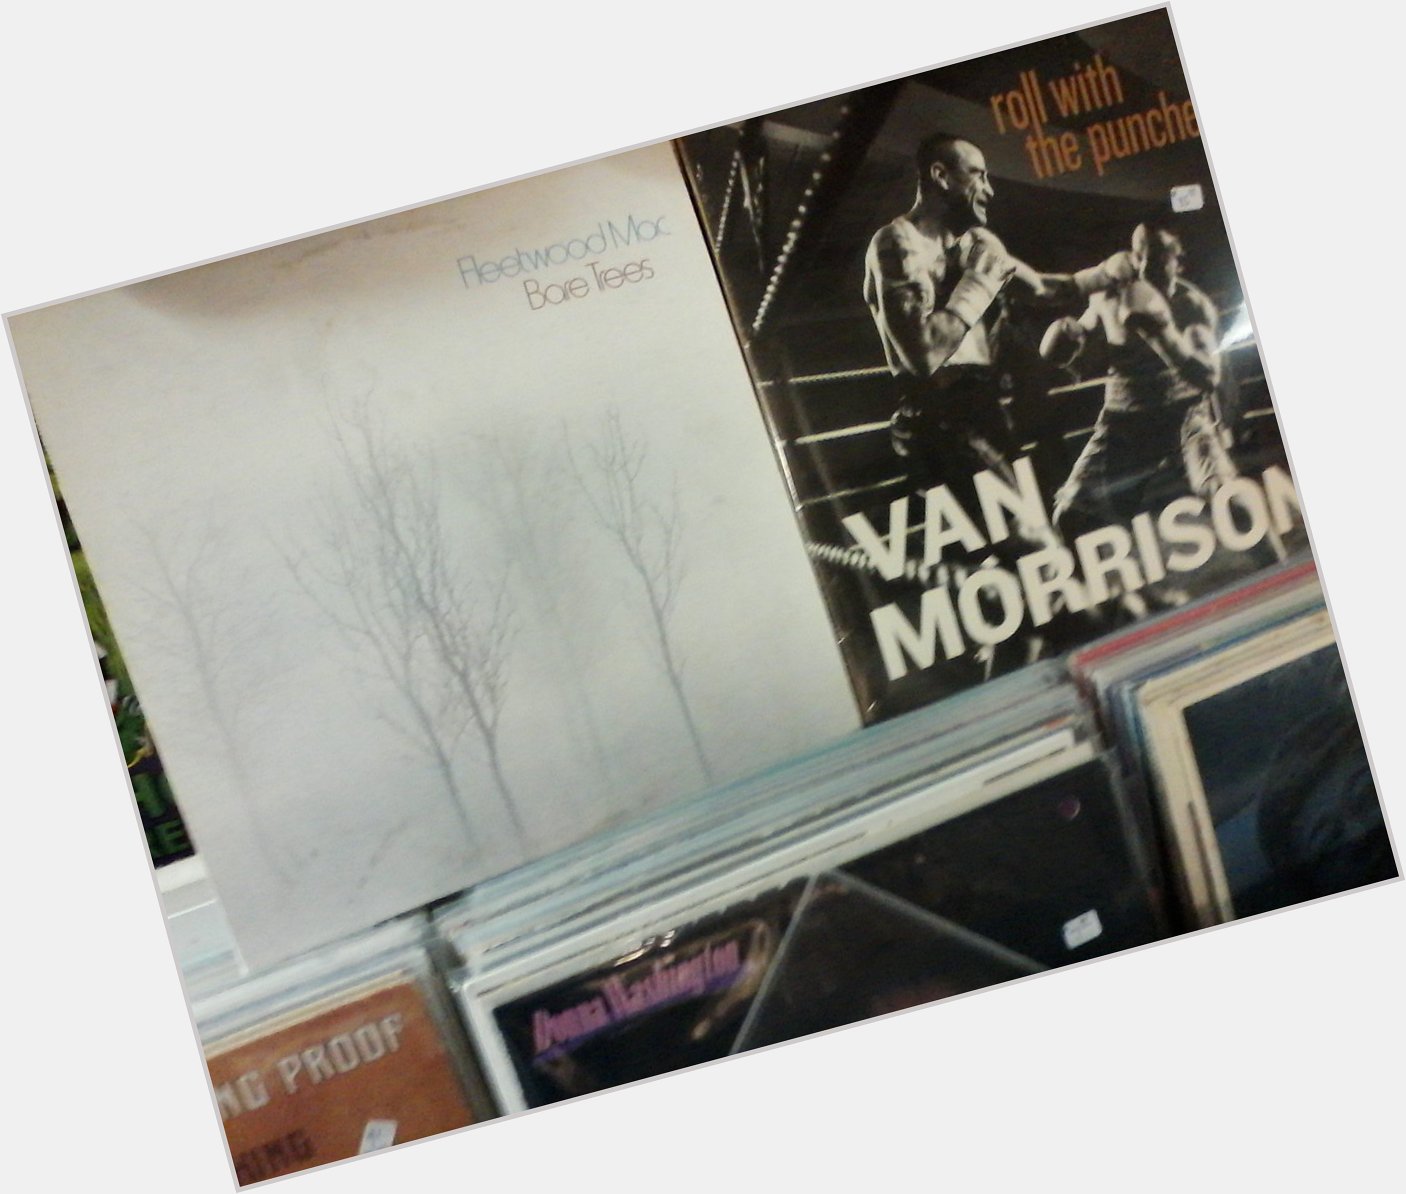 Happy Birthday to the late Bob Welch of Fleetwood Mac & Van Morrison 